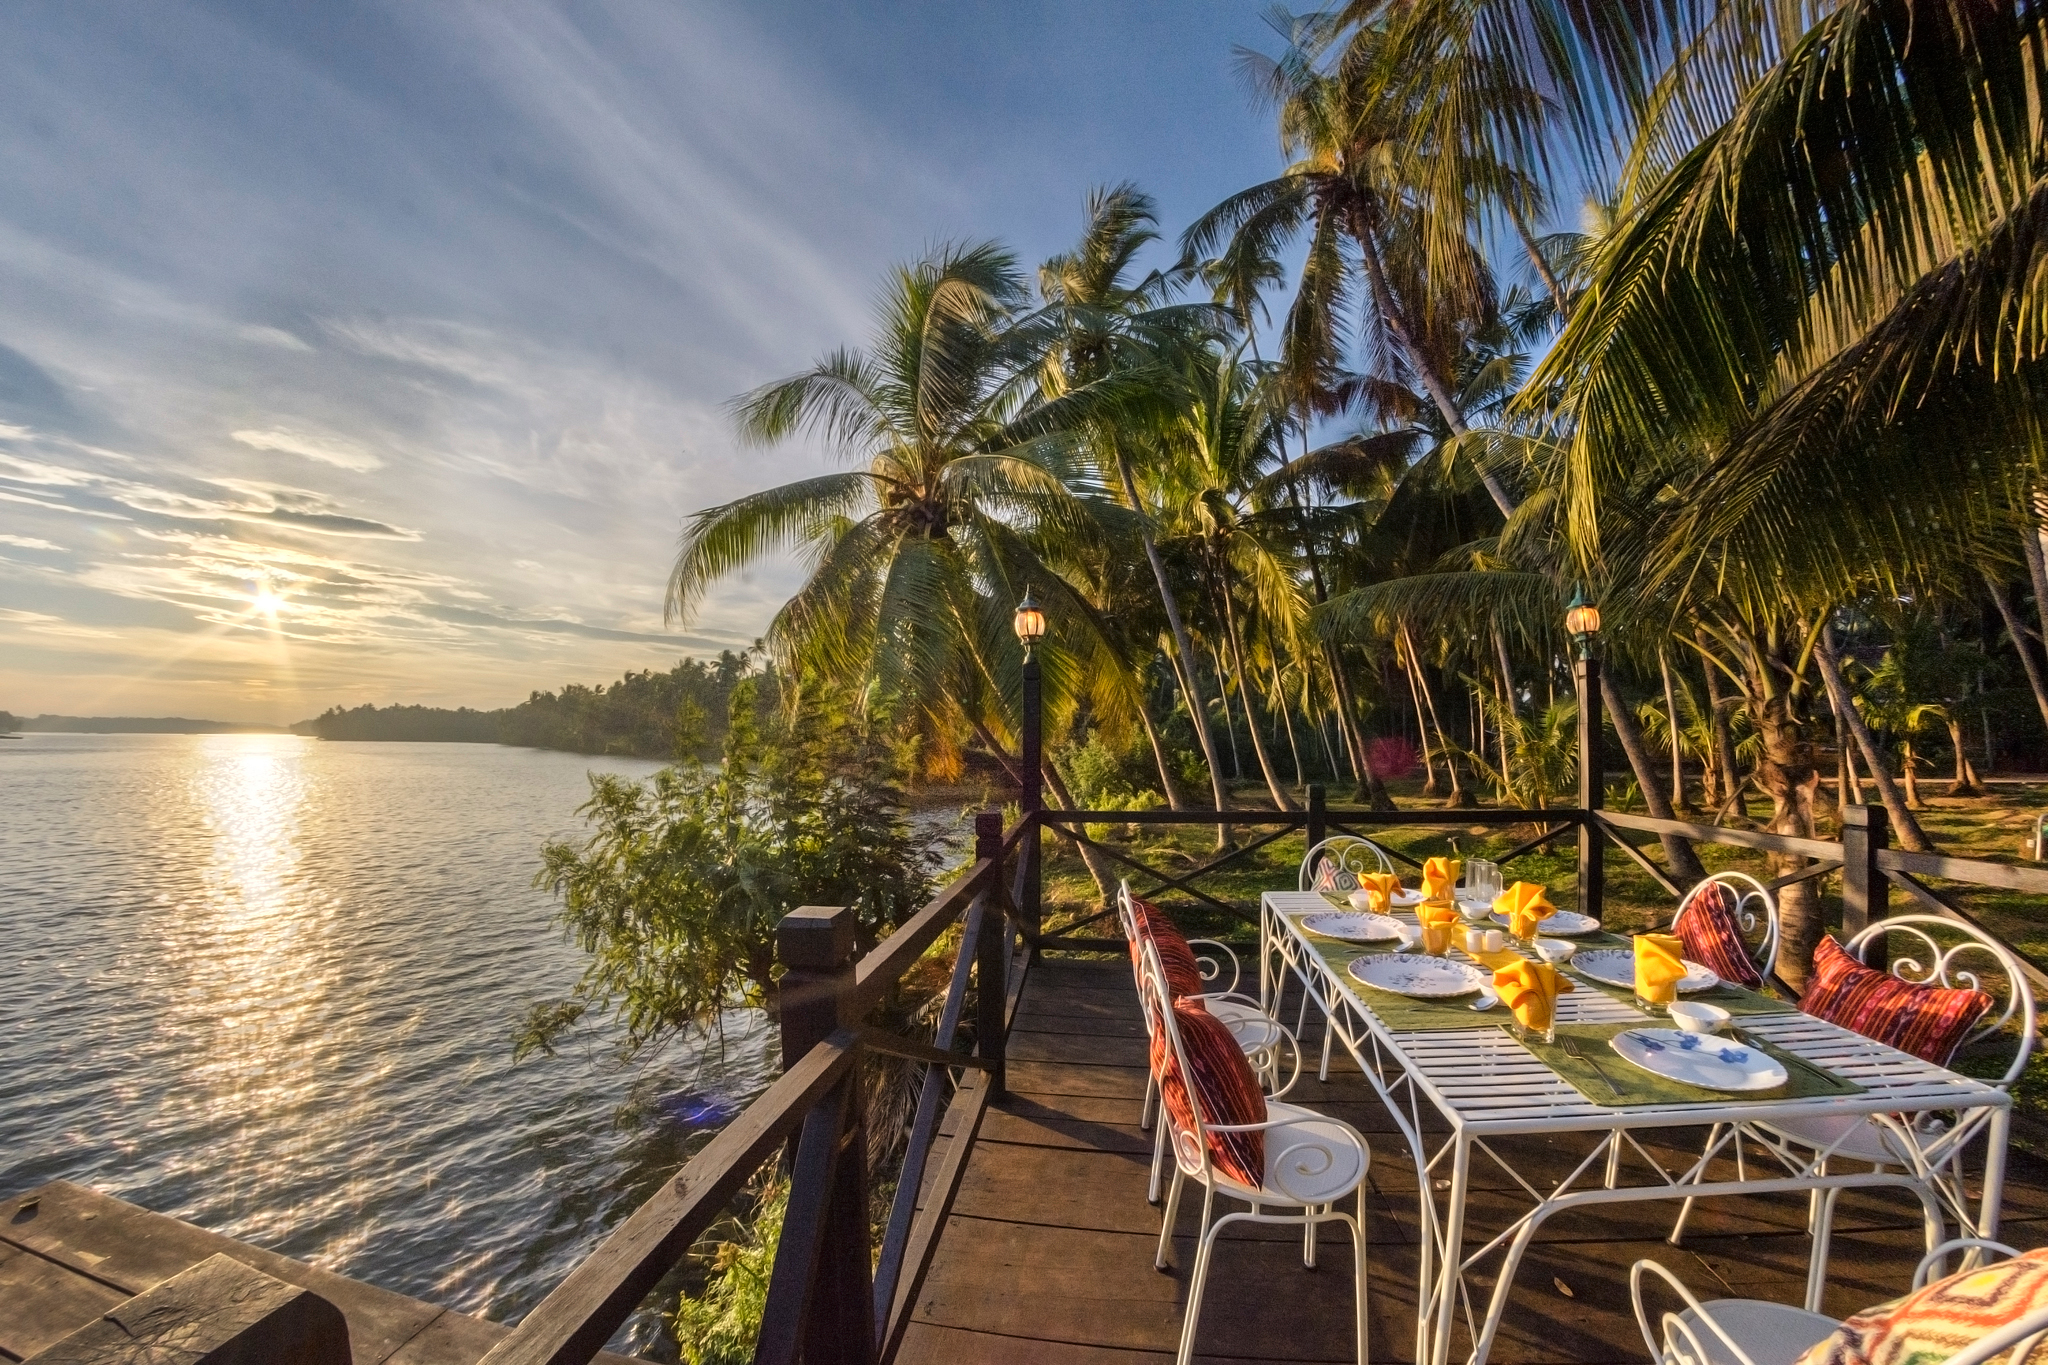 Dine by the river, Romantic Dinner, SaffronStays Suvarna Sangam, Udupi, Suvarna River, Palm trees